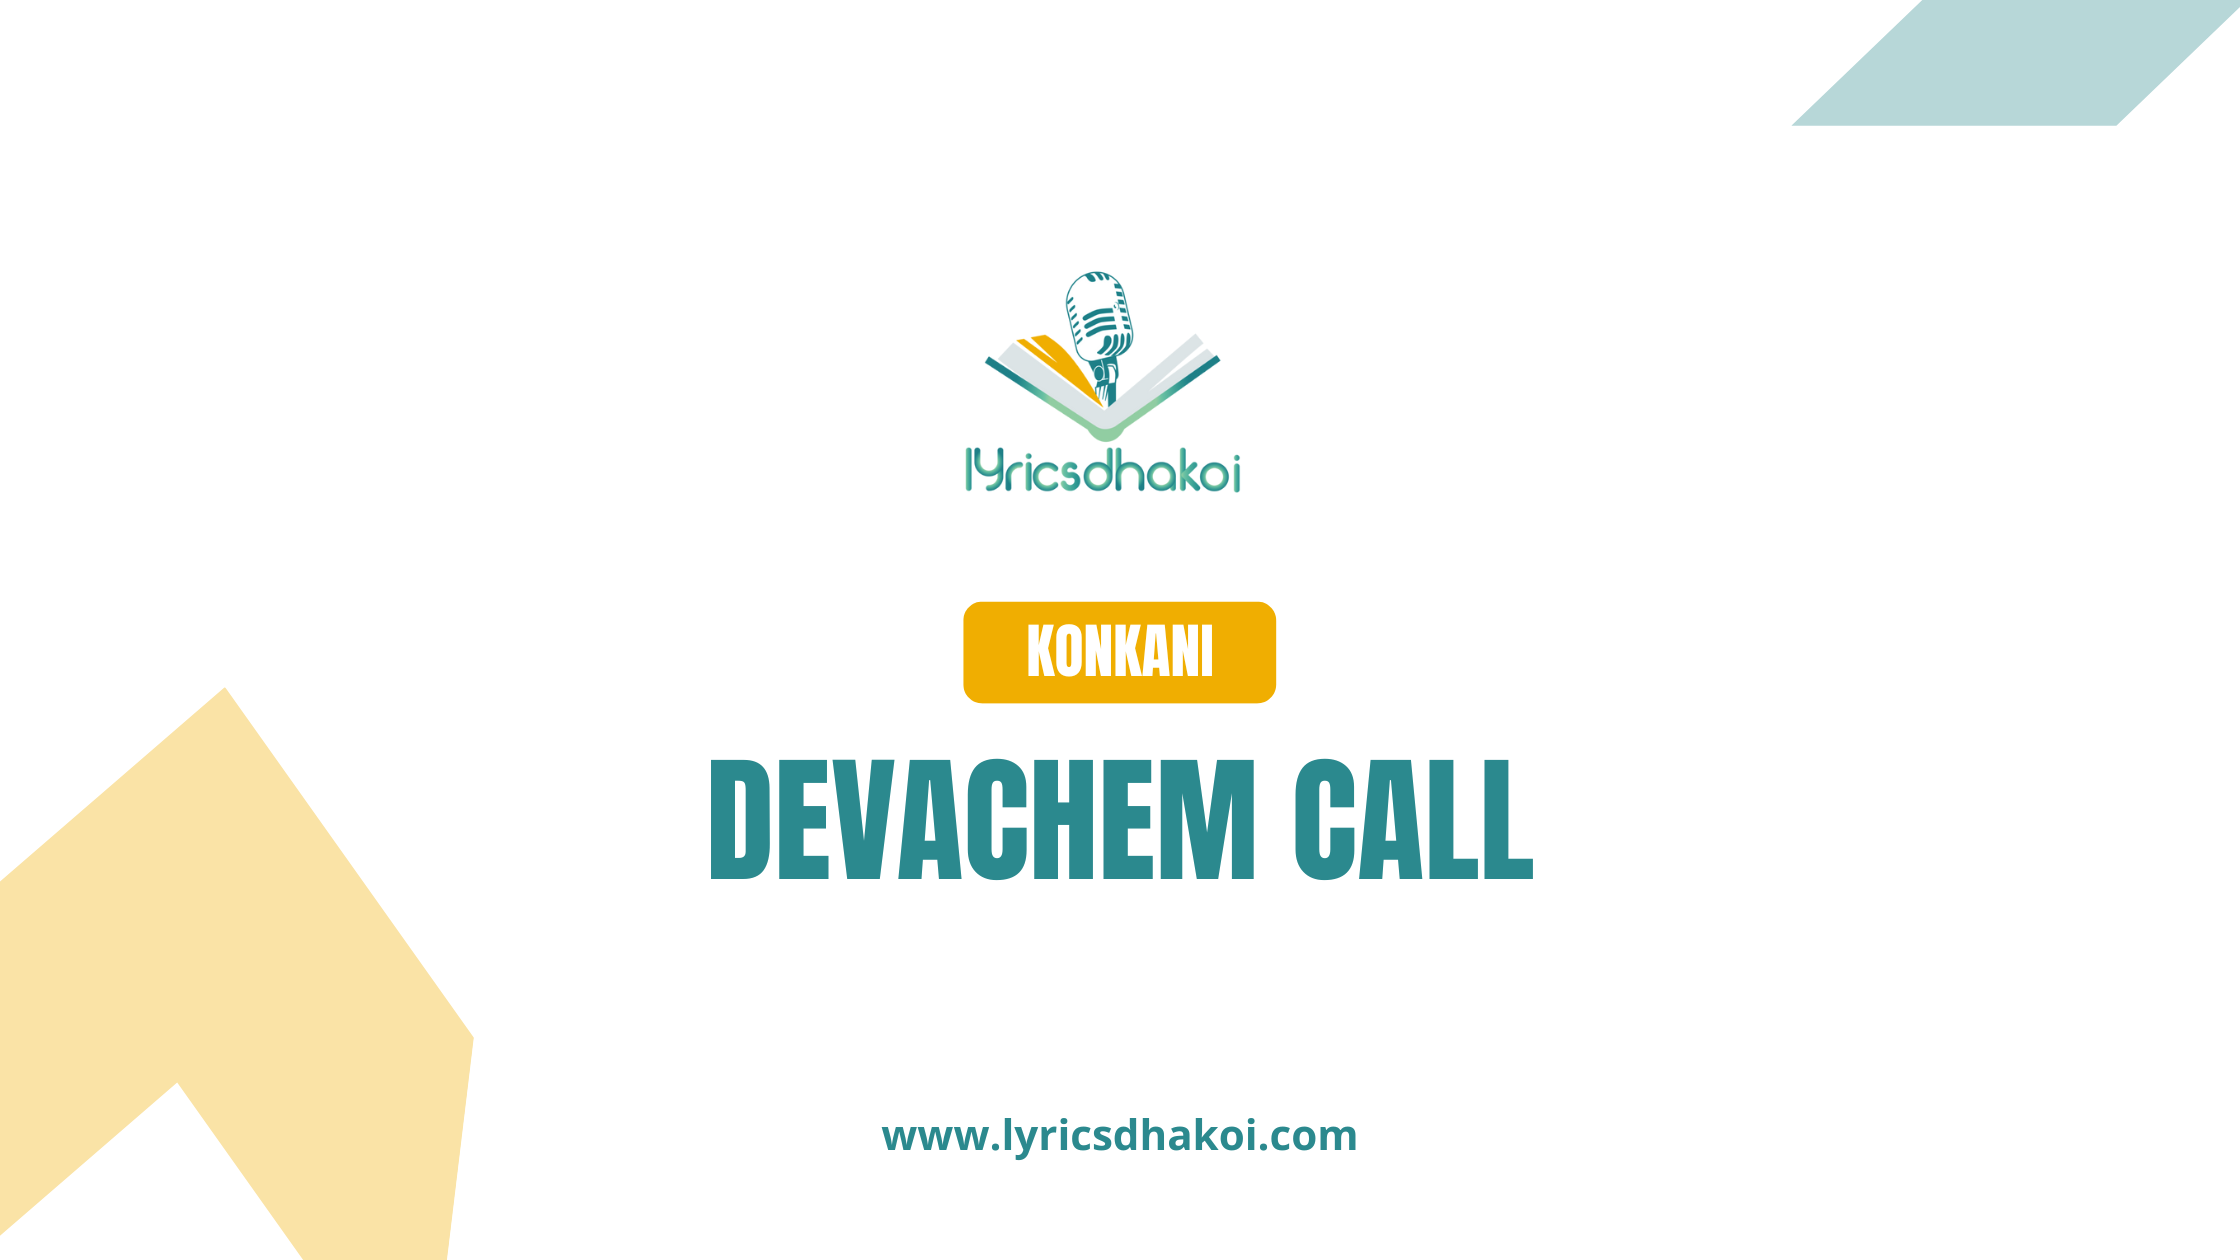 Devachem Call Konkani Lyrics for Karaoke Online - LyricsDhakoi.com